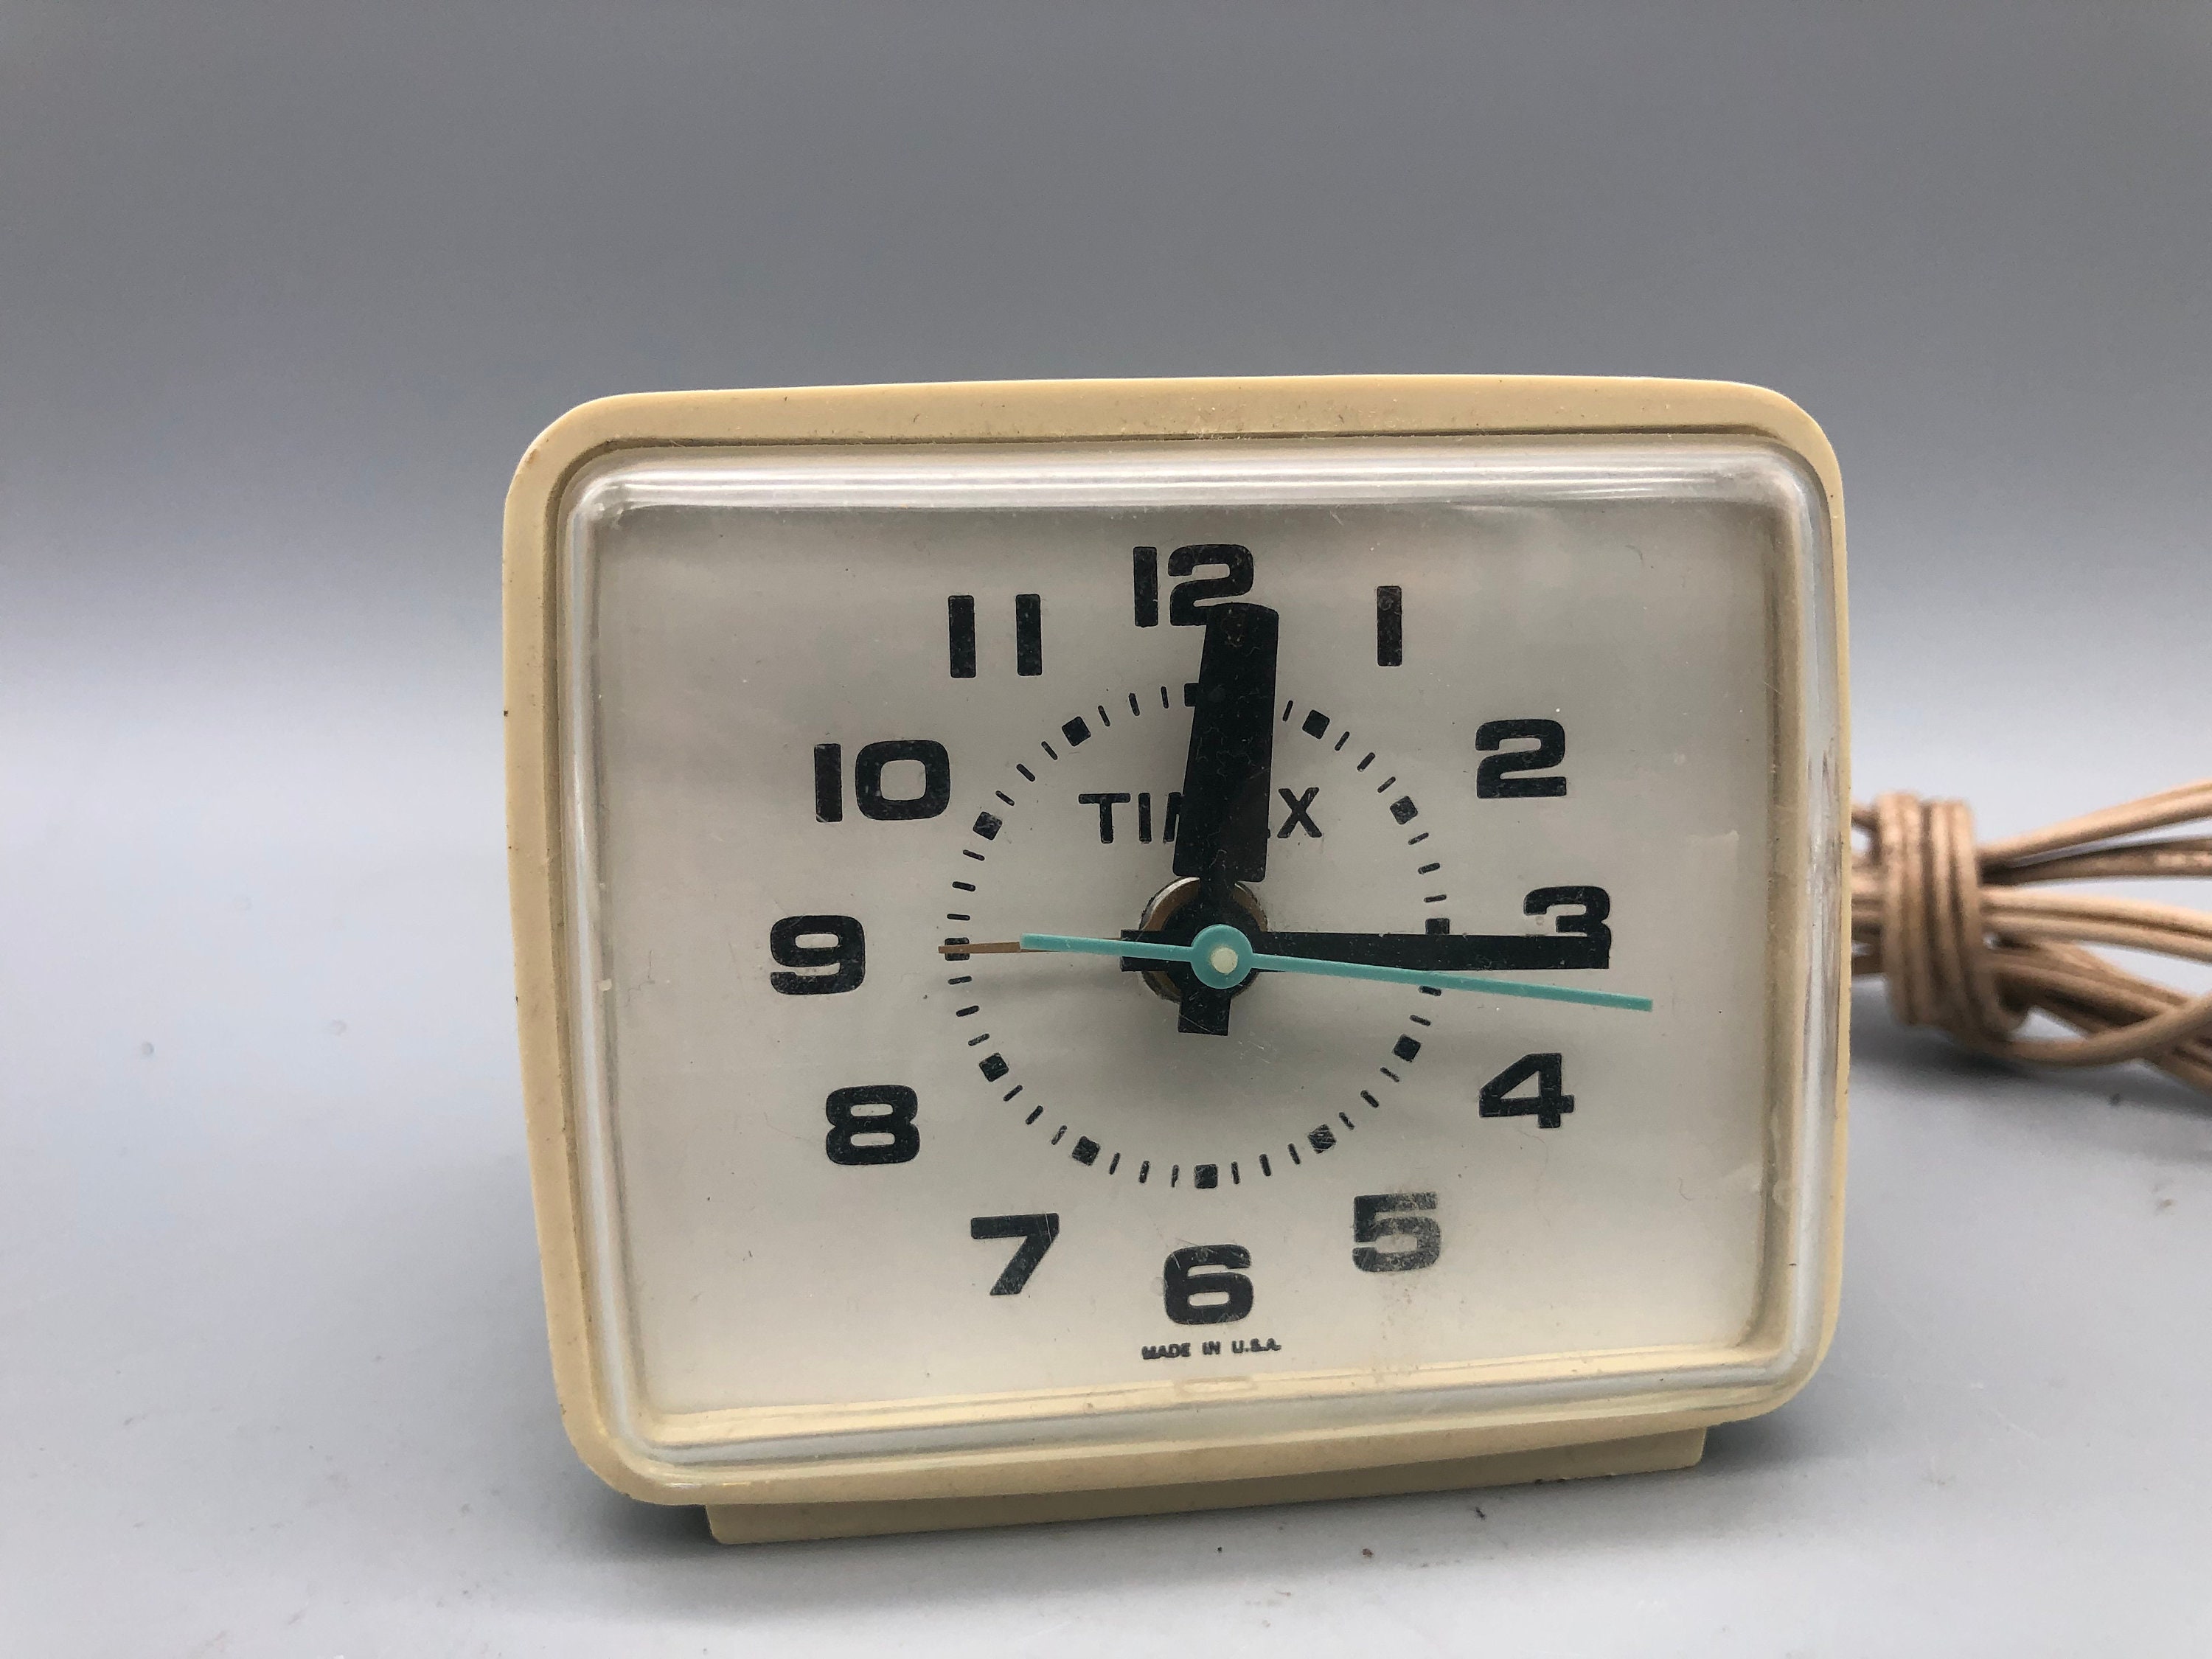 Disney Stitch Alarm Clock Rare height 10cm Working From Japan